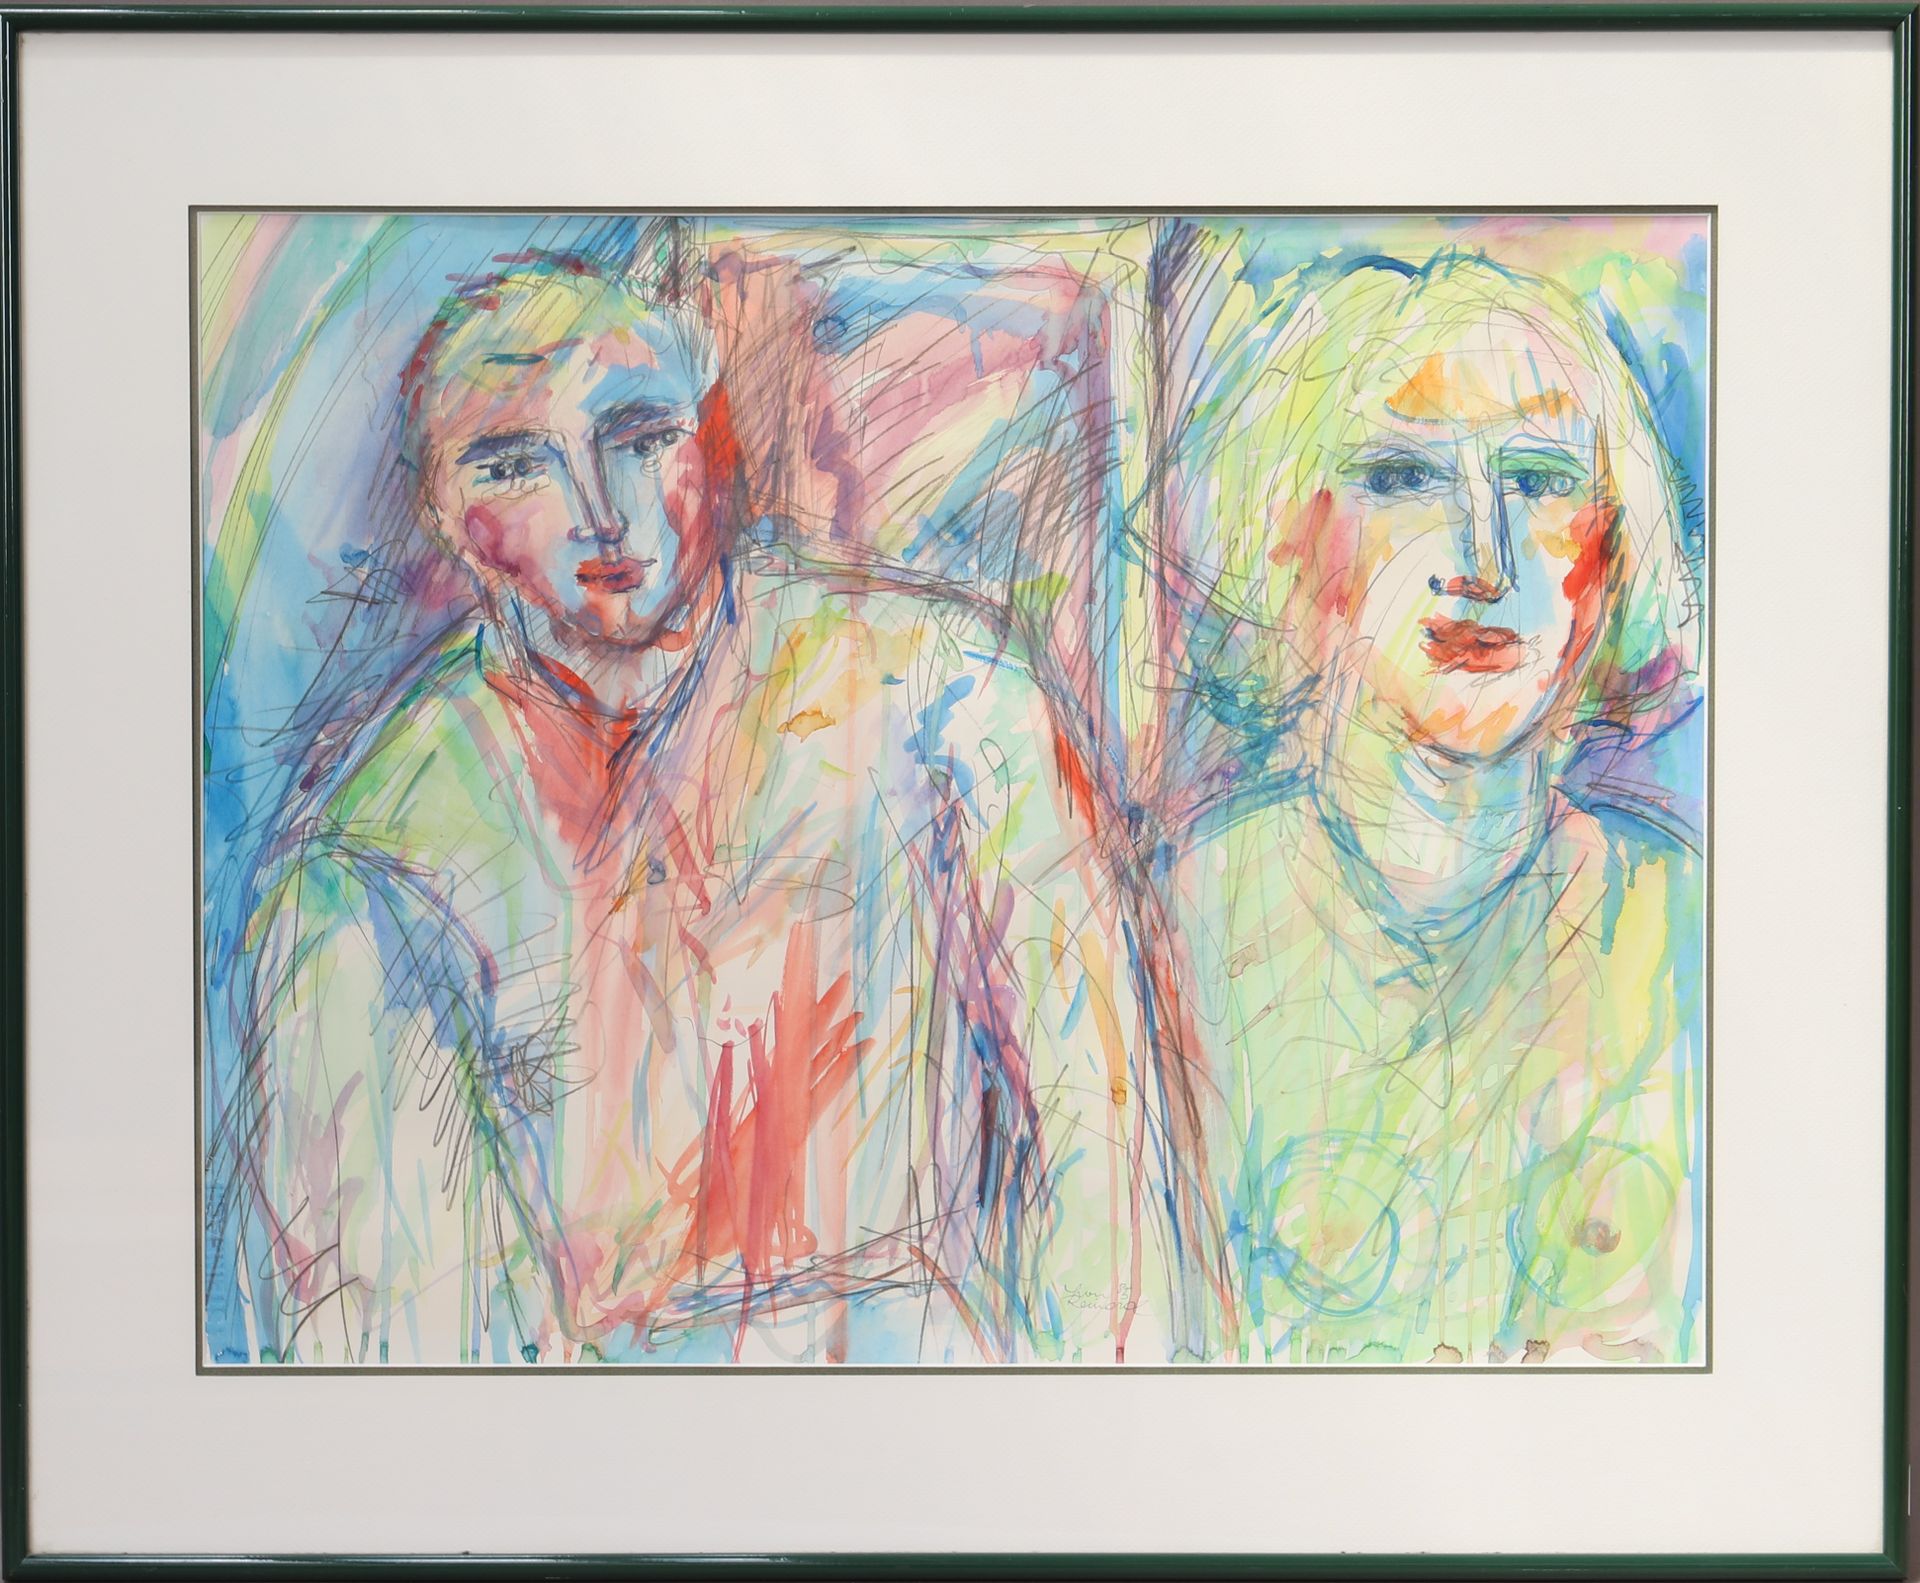 Null "Couple" de Yvon Reinard (né en 1956)

Artiste peintre luxembourgeois, memb&hellip;